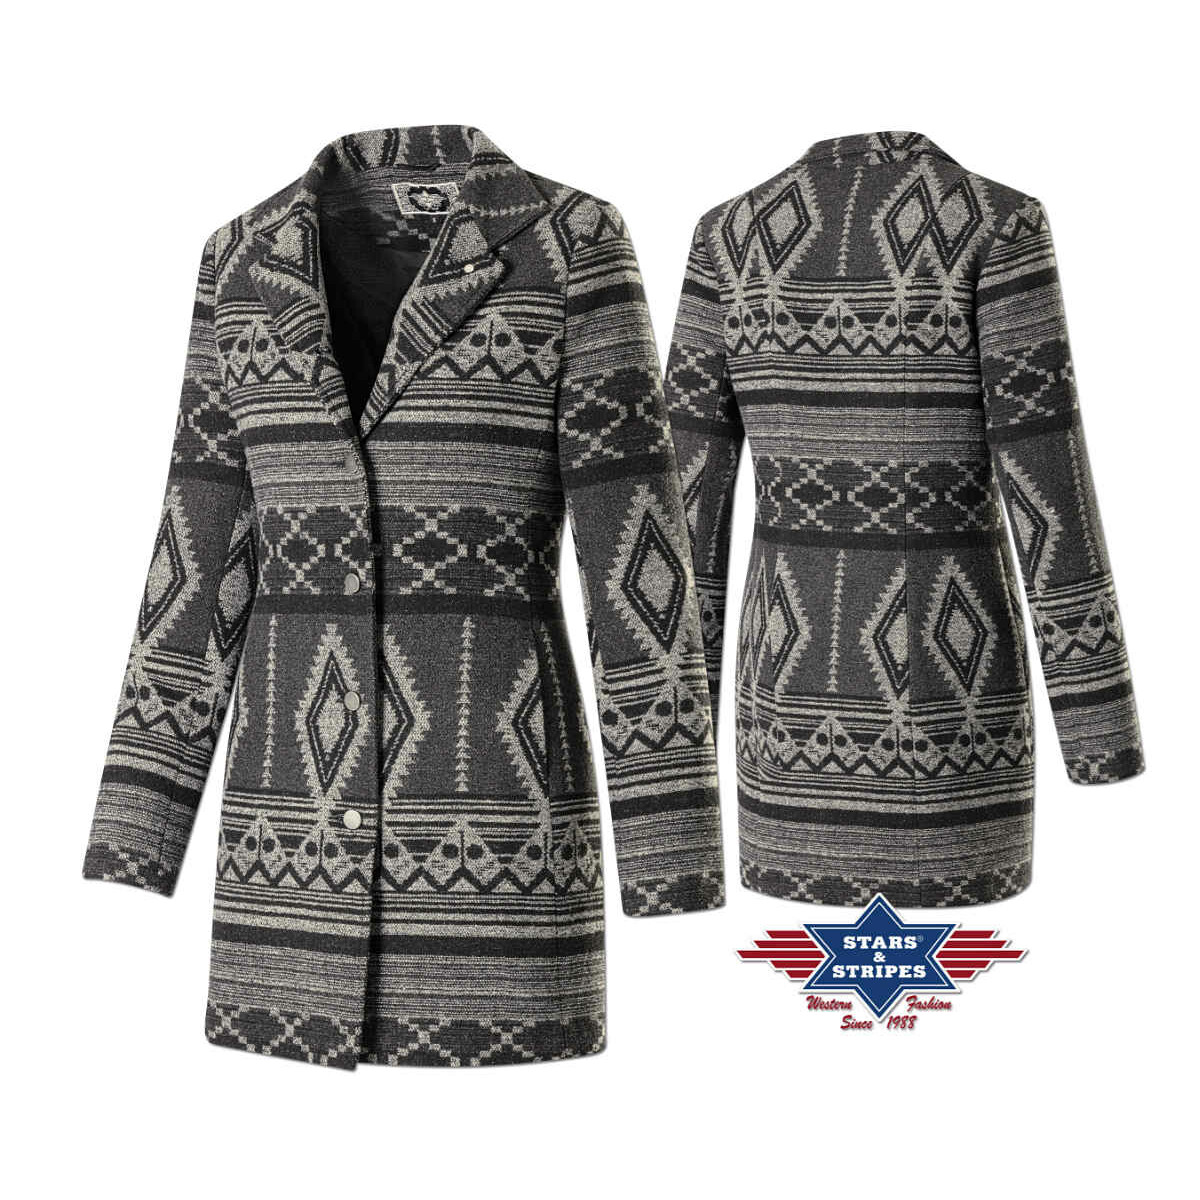 Damenmantel Wintermantel warme Winterjacke im Azteken-Design von Stars & Stripes